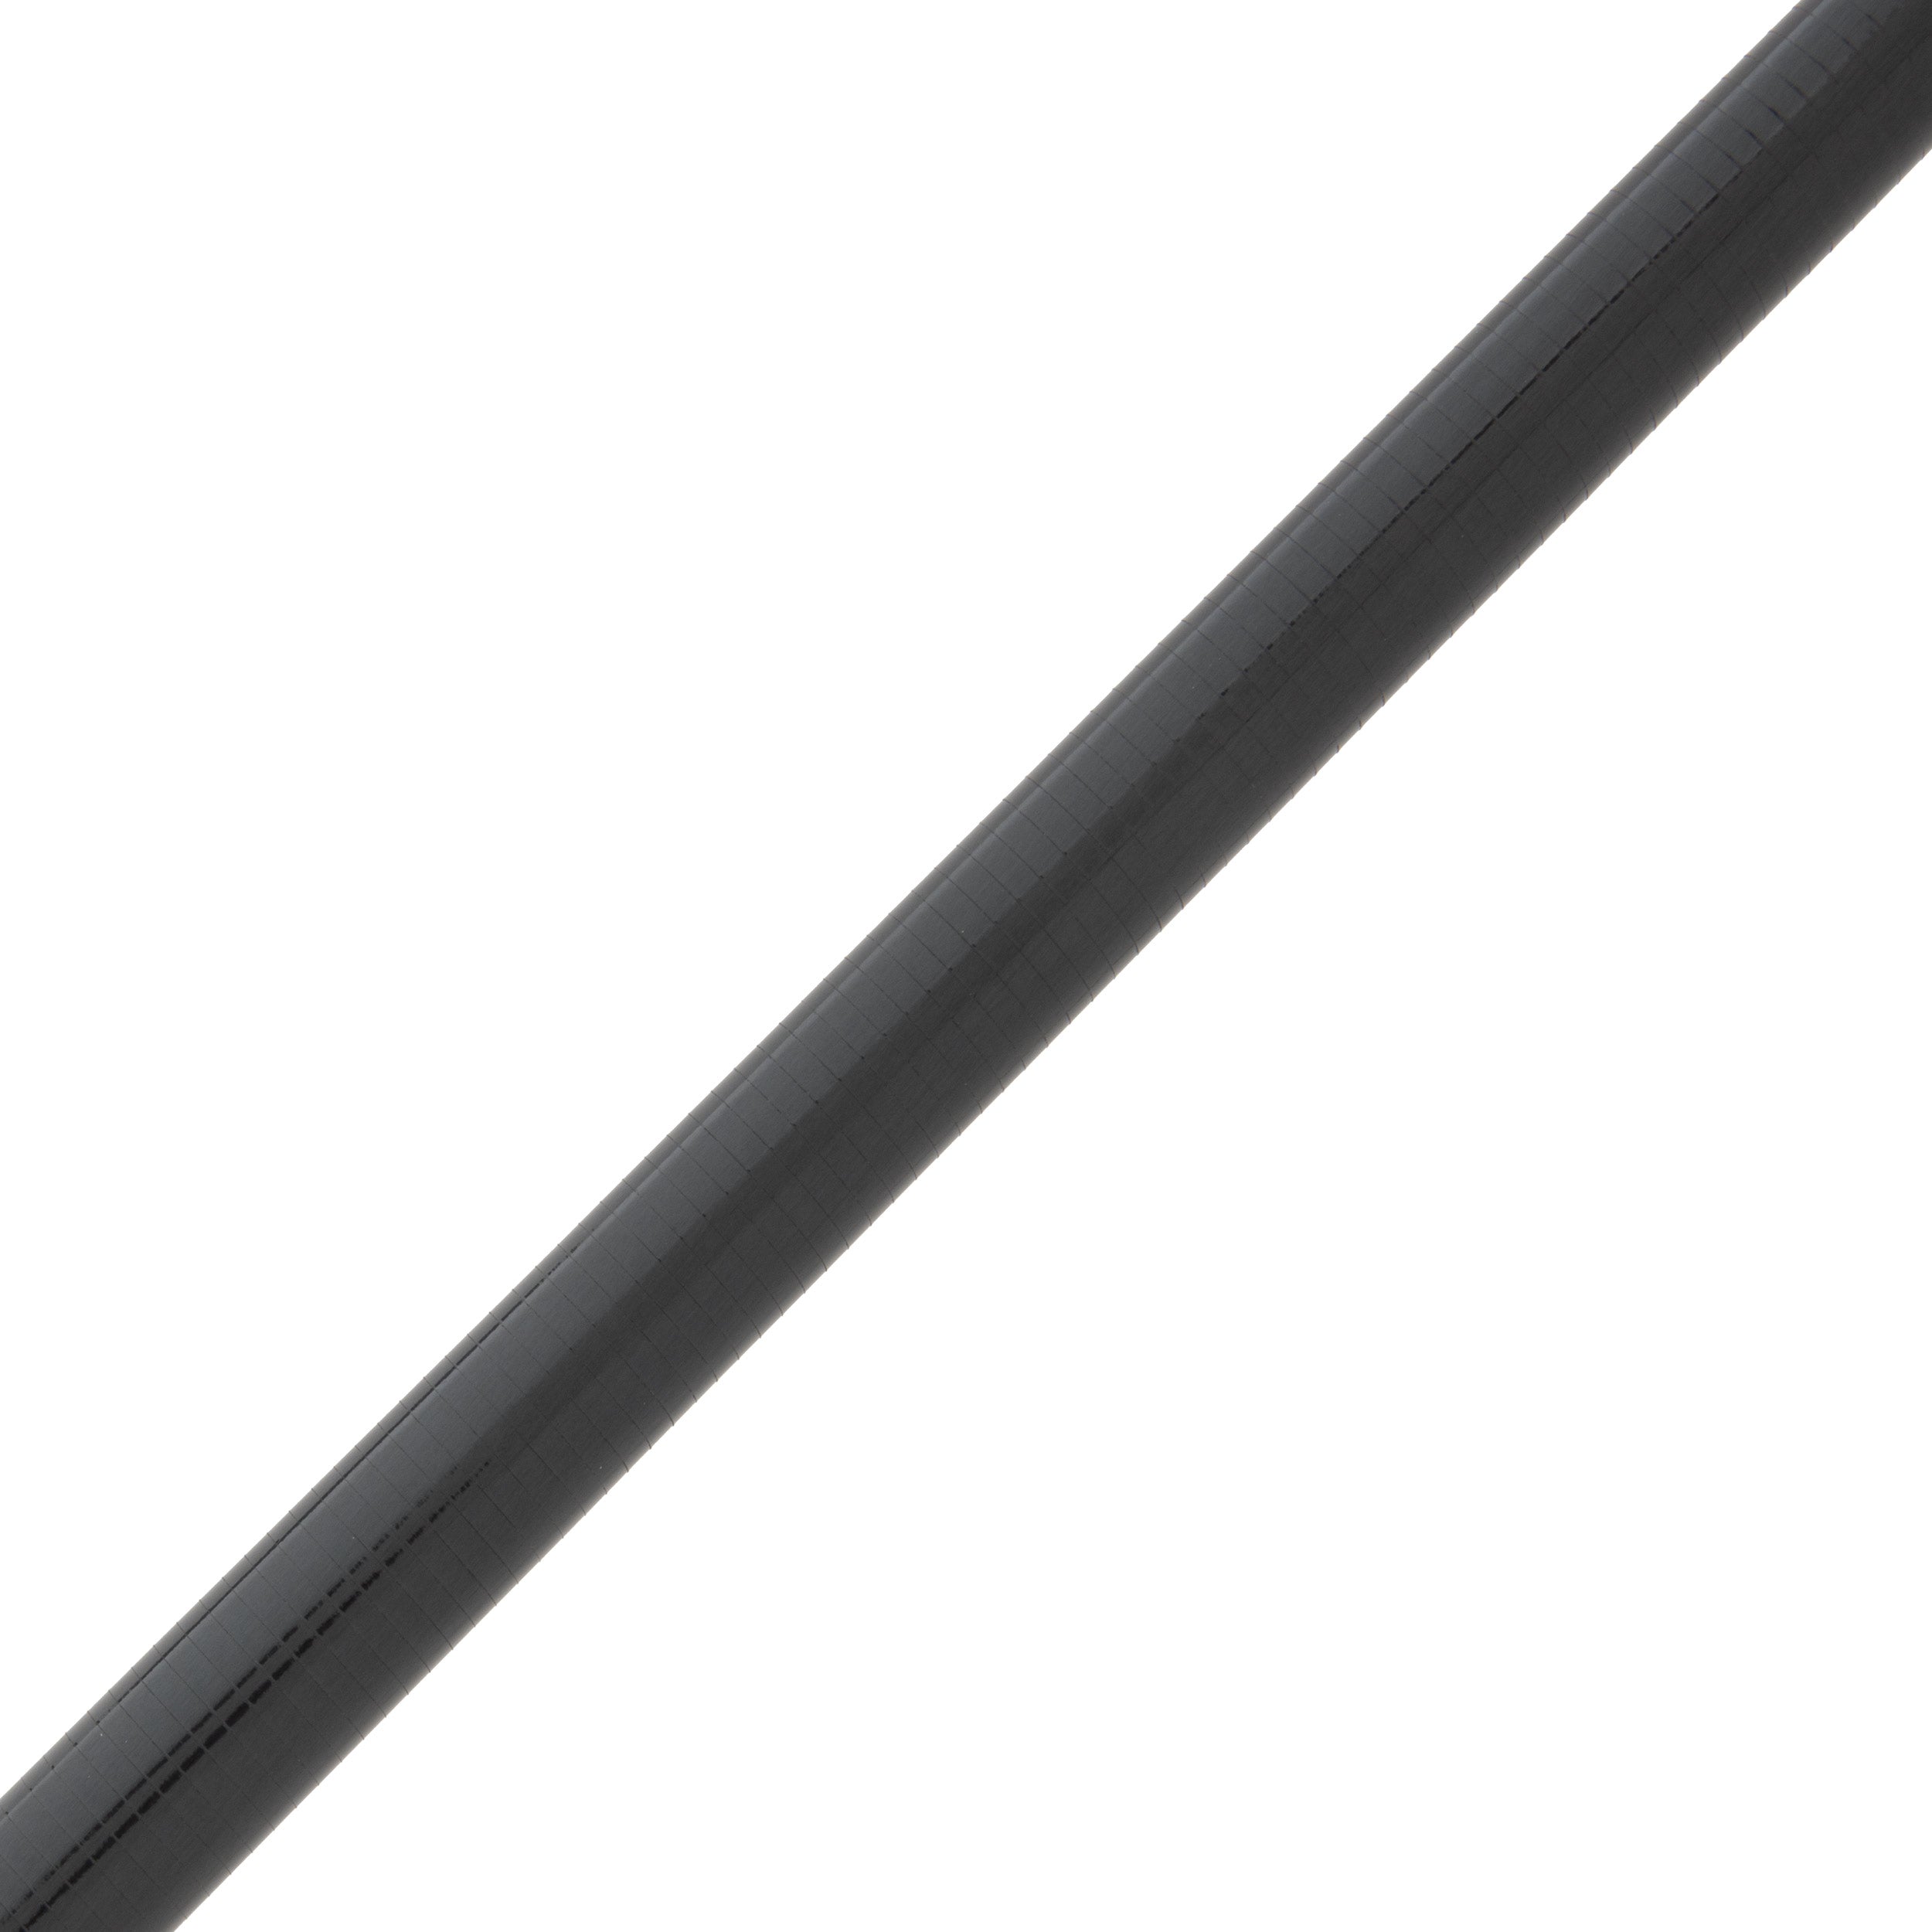 Cashion CR6r Carbon Fiber All-Purpose Rod Blank - CR6r-iFS924